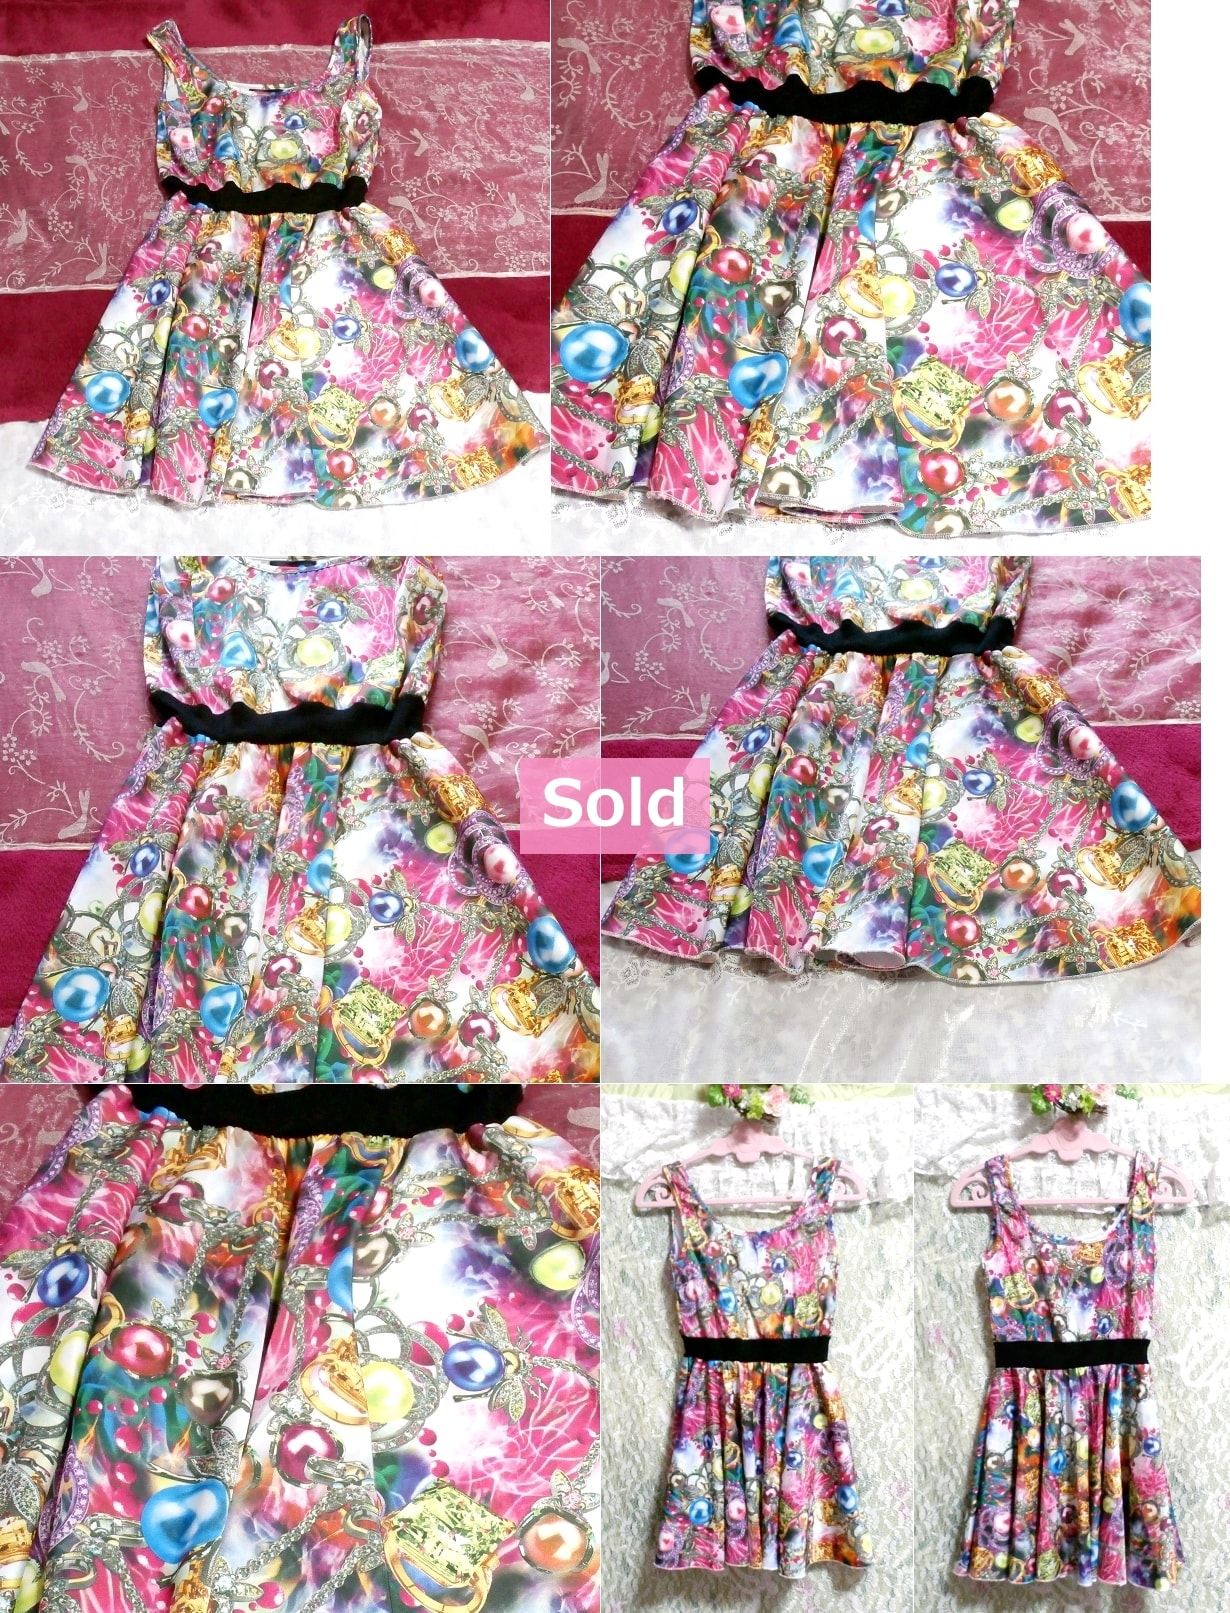 Swimsuit-like jewelry colorful illustration sleeveless mini skirt dress / cosplay Jewelry pattern colorful skirt one piece / tunic / cosplay